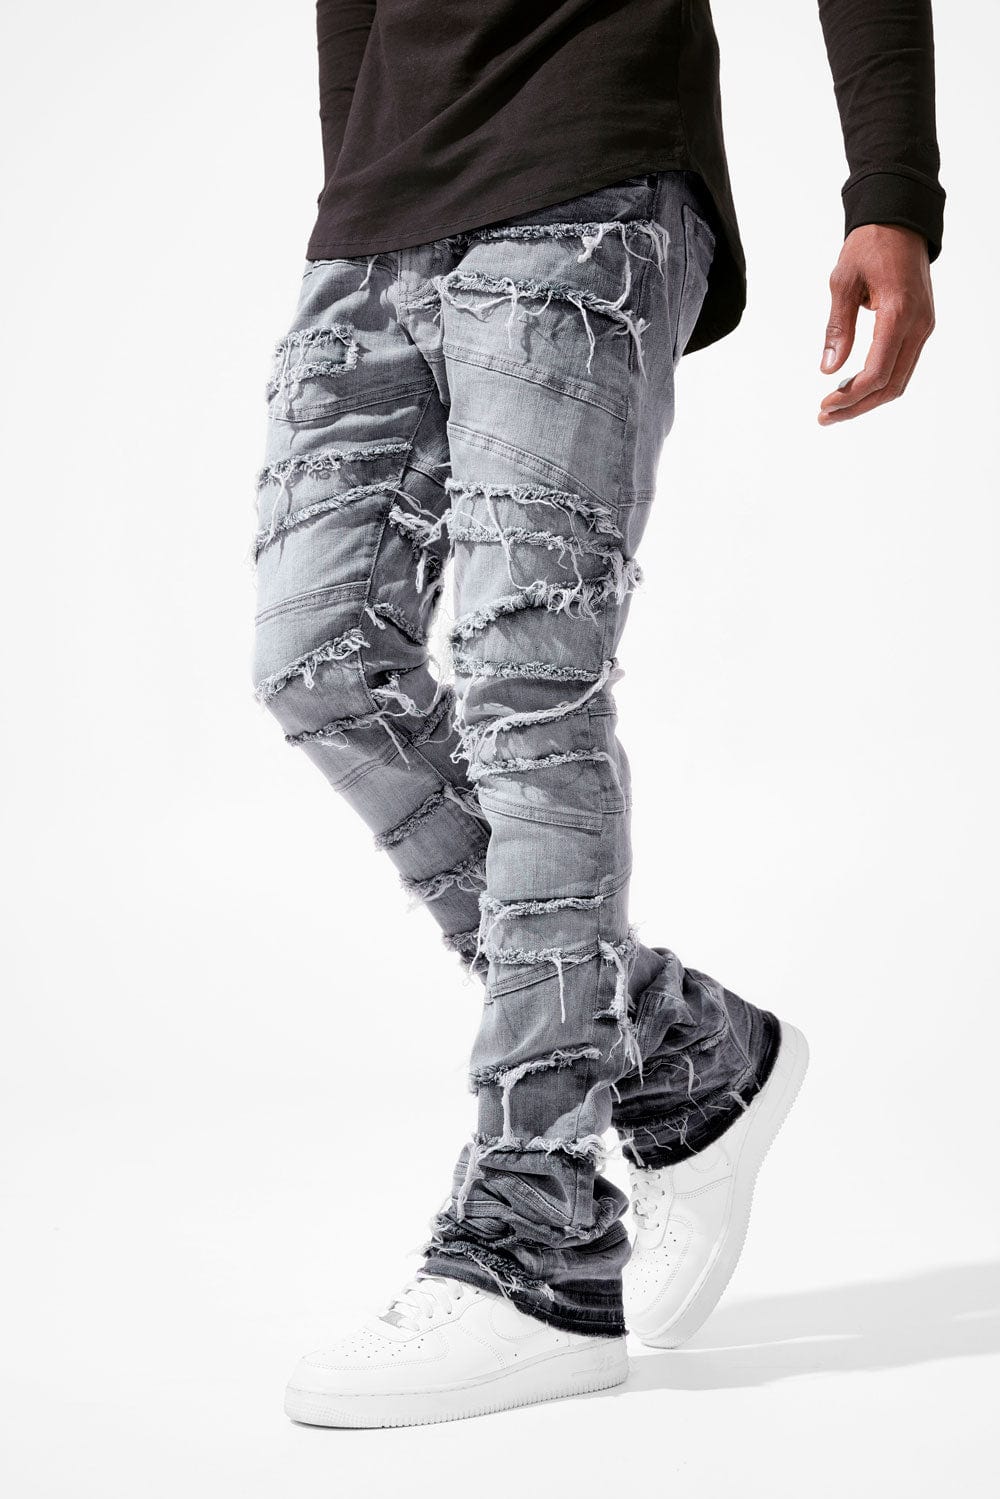 Martin Stacked - Psychosis Denim Jeans - Arctic Grey